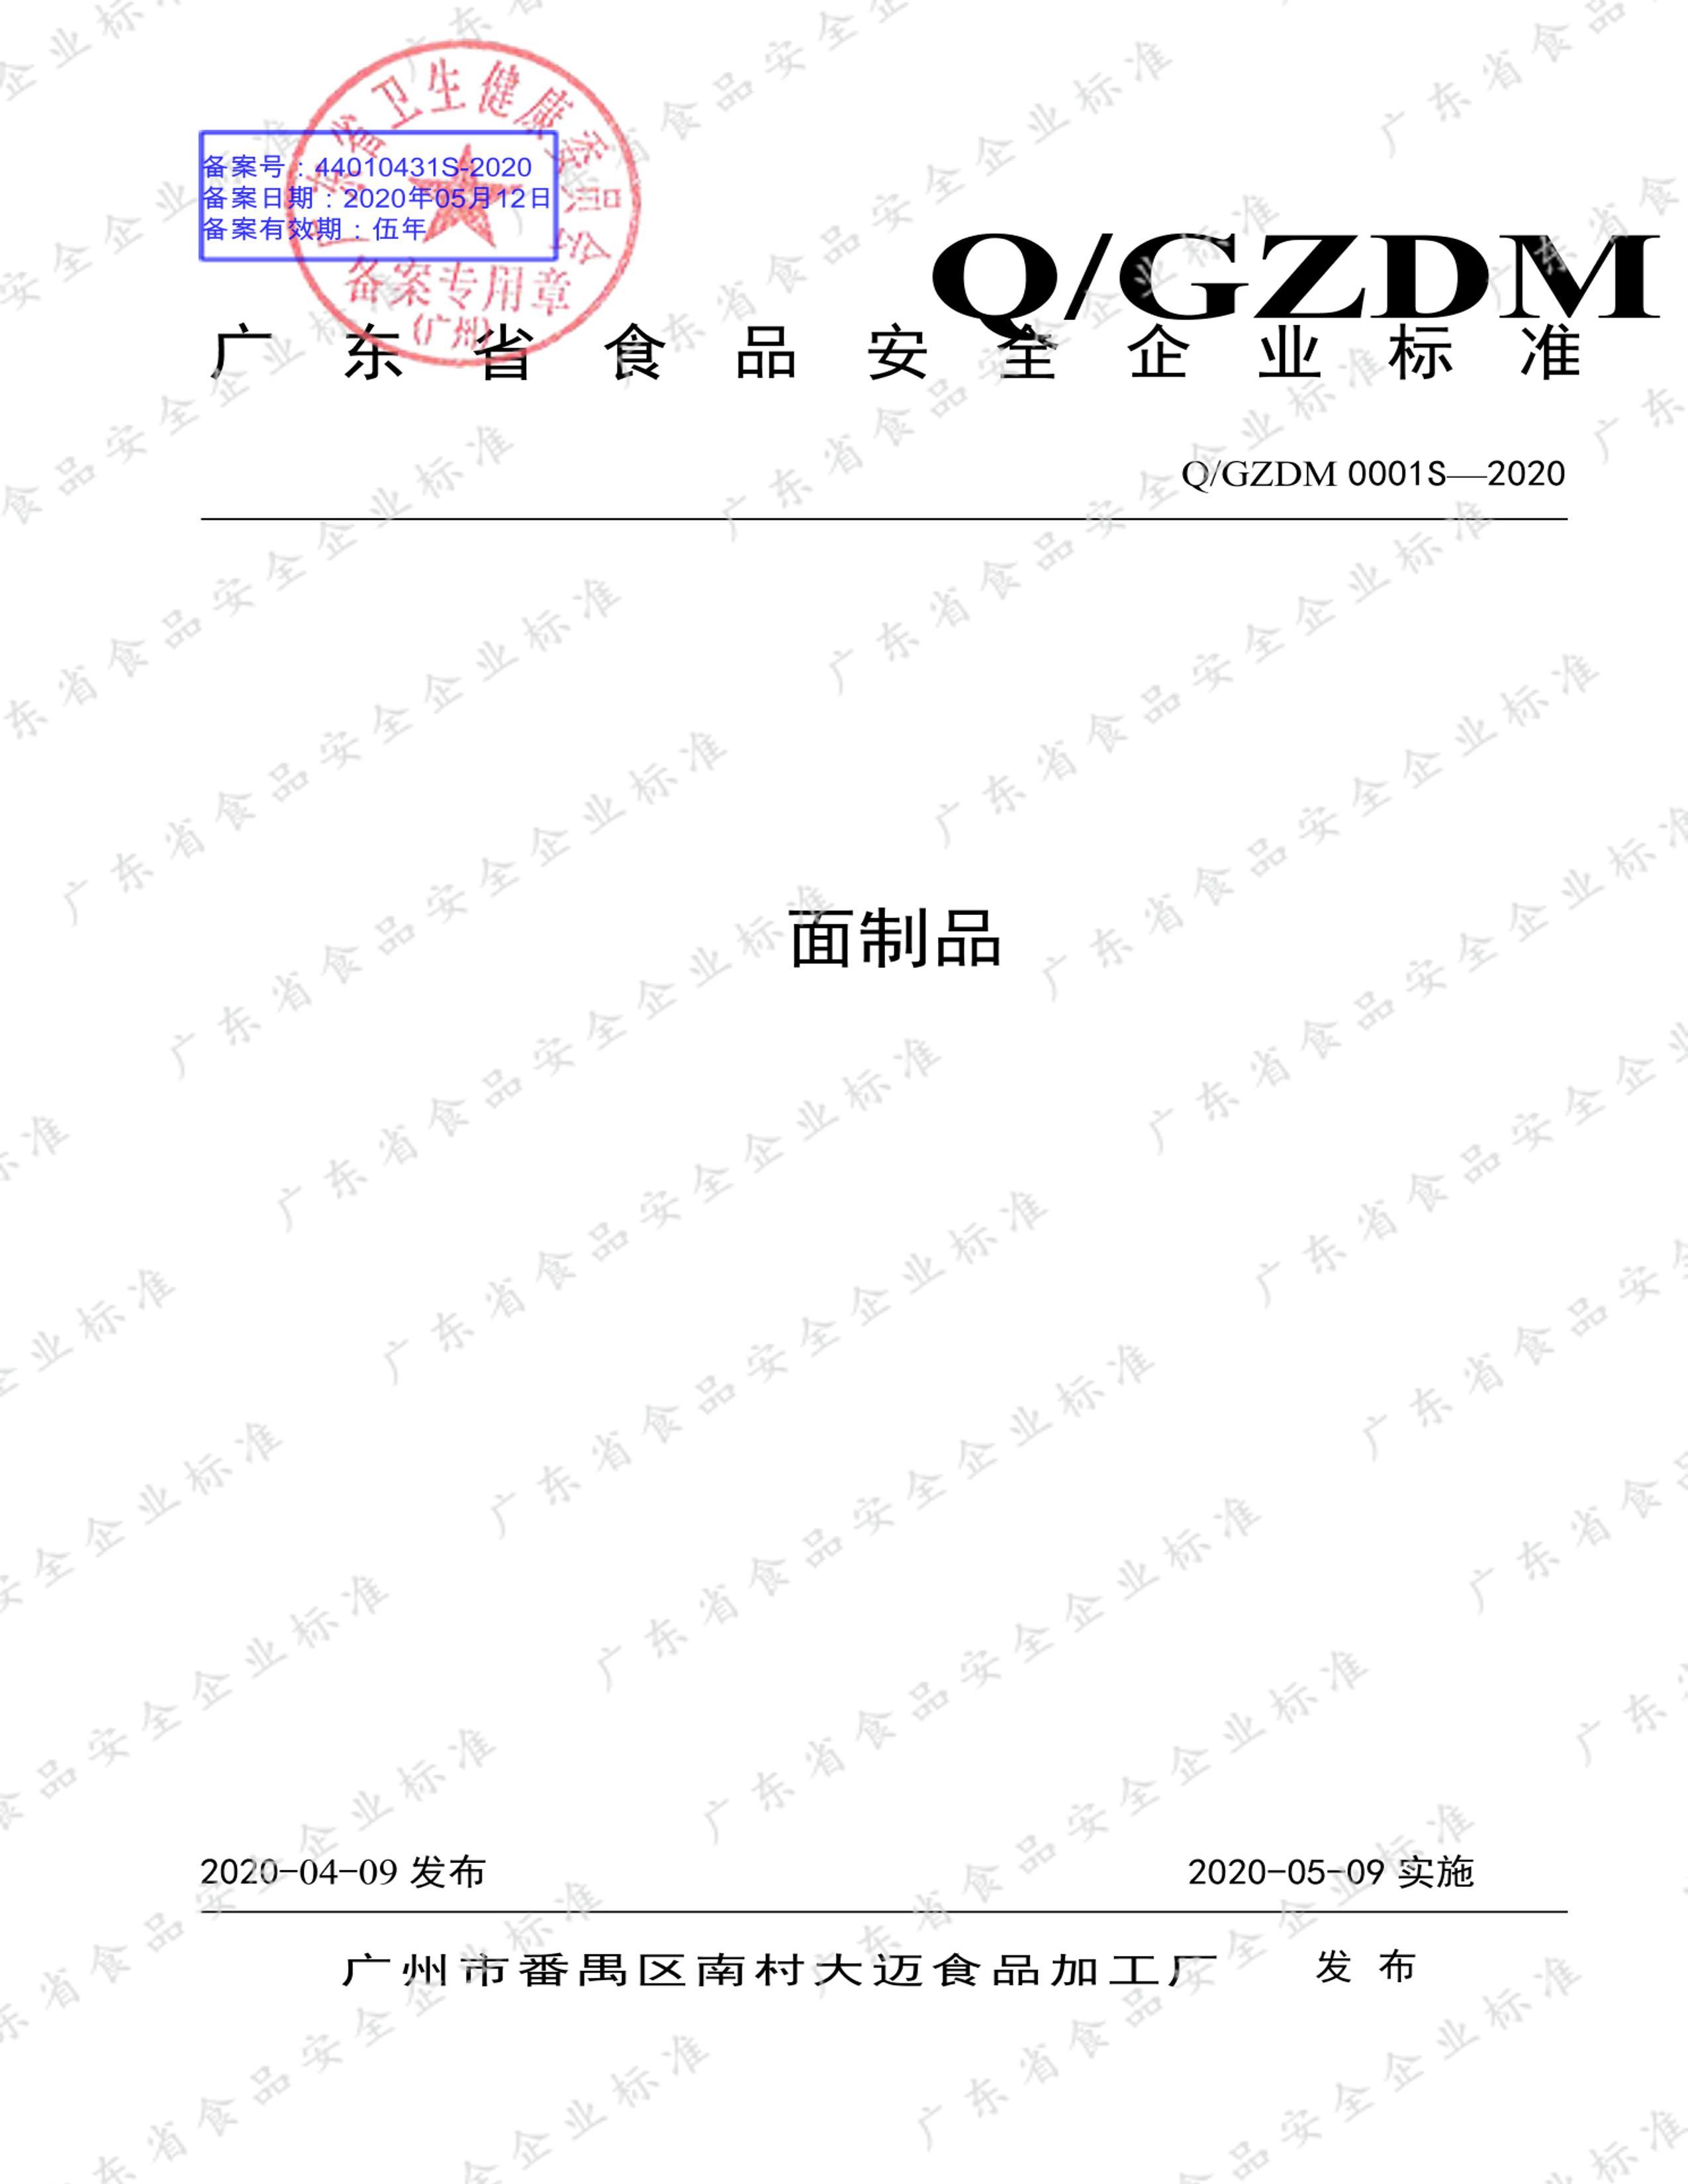 GZDM 0001S-2020 Ʒ.pdf1ҳ